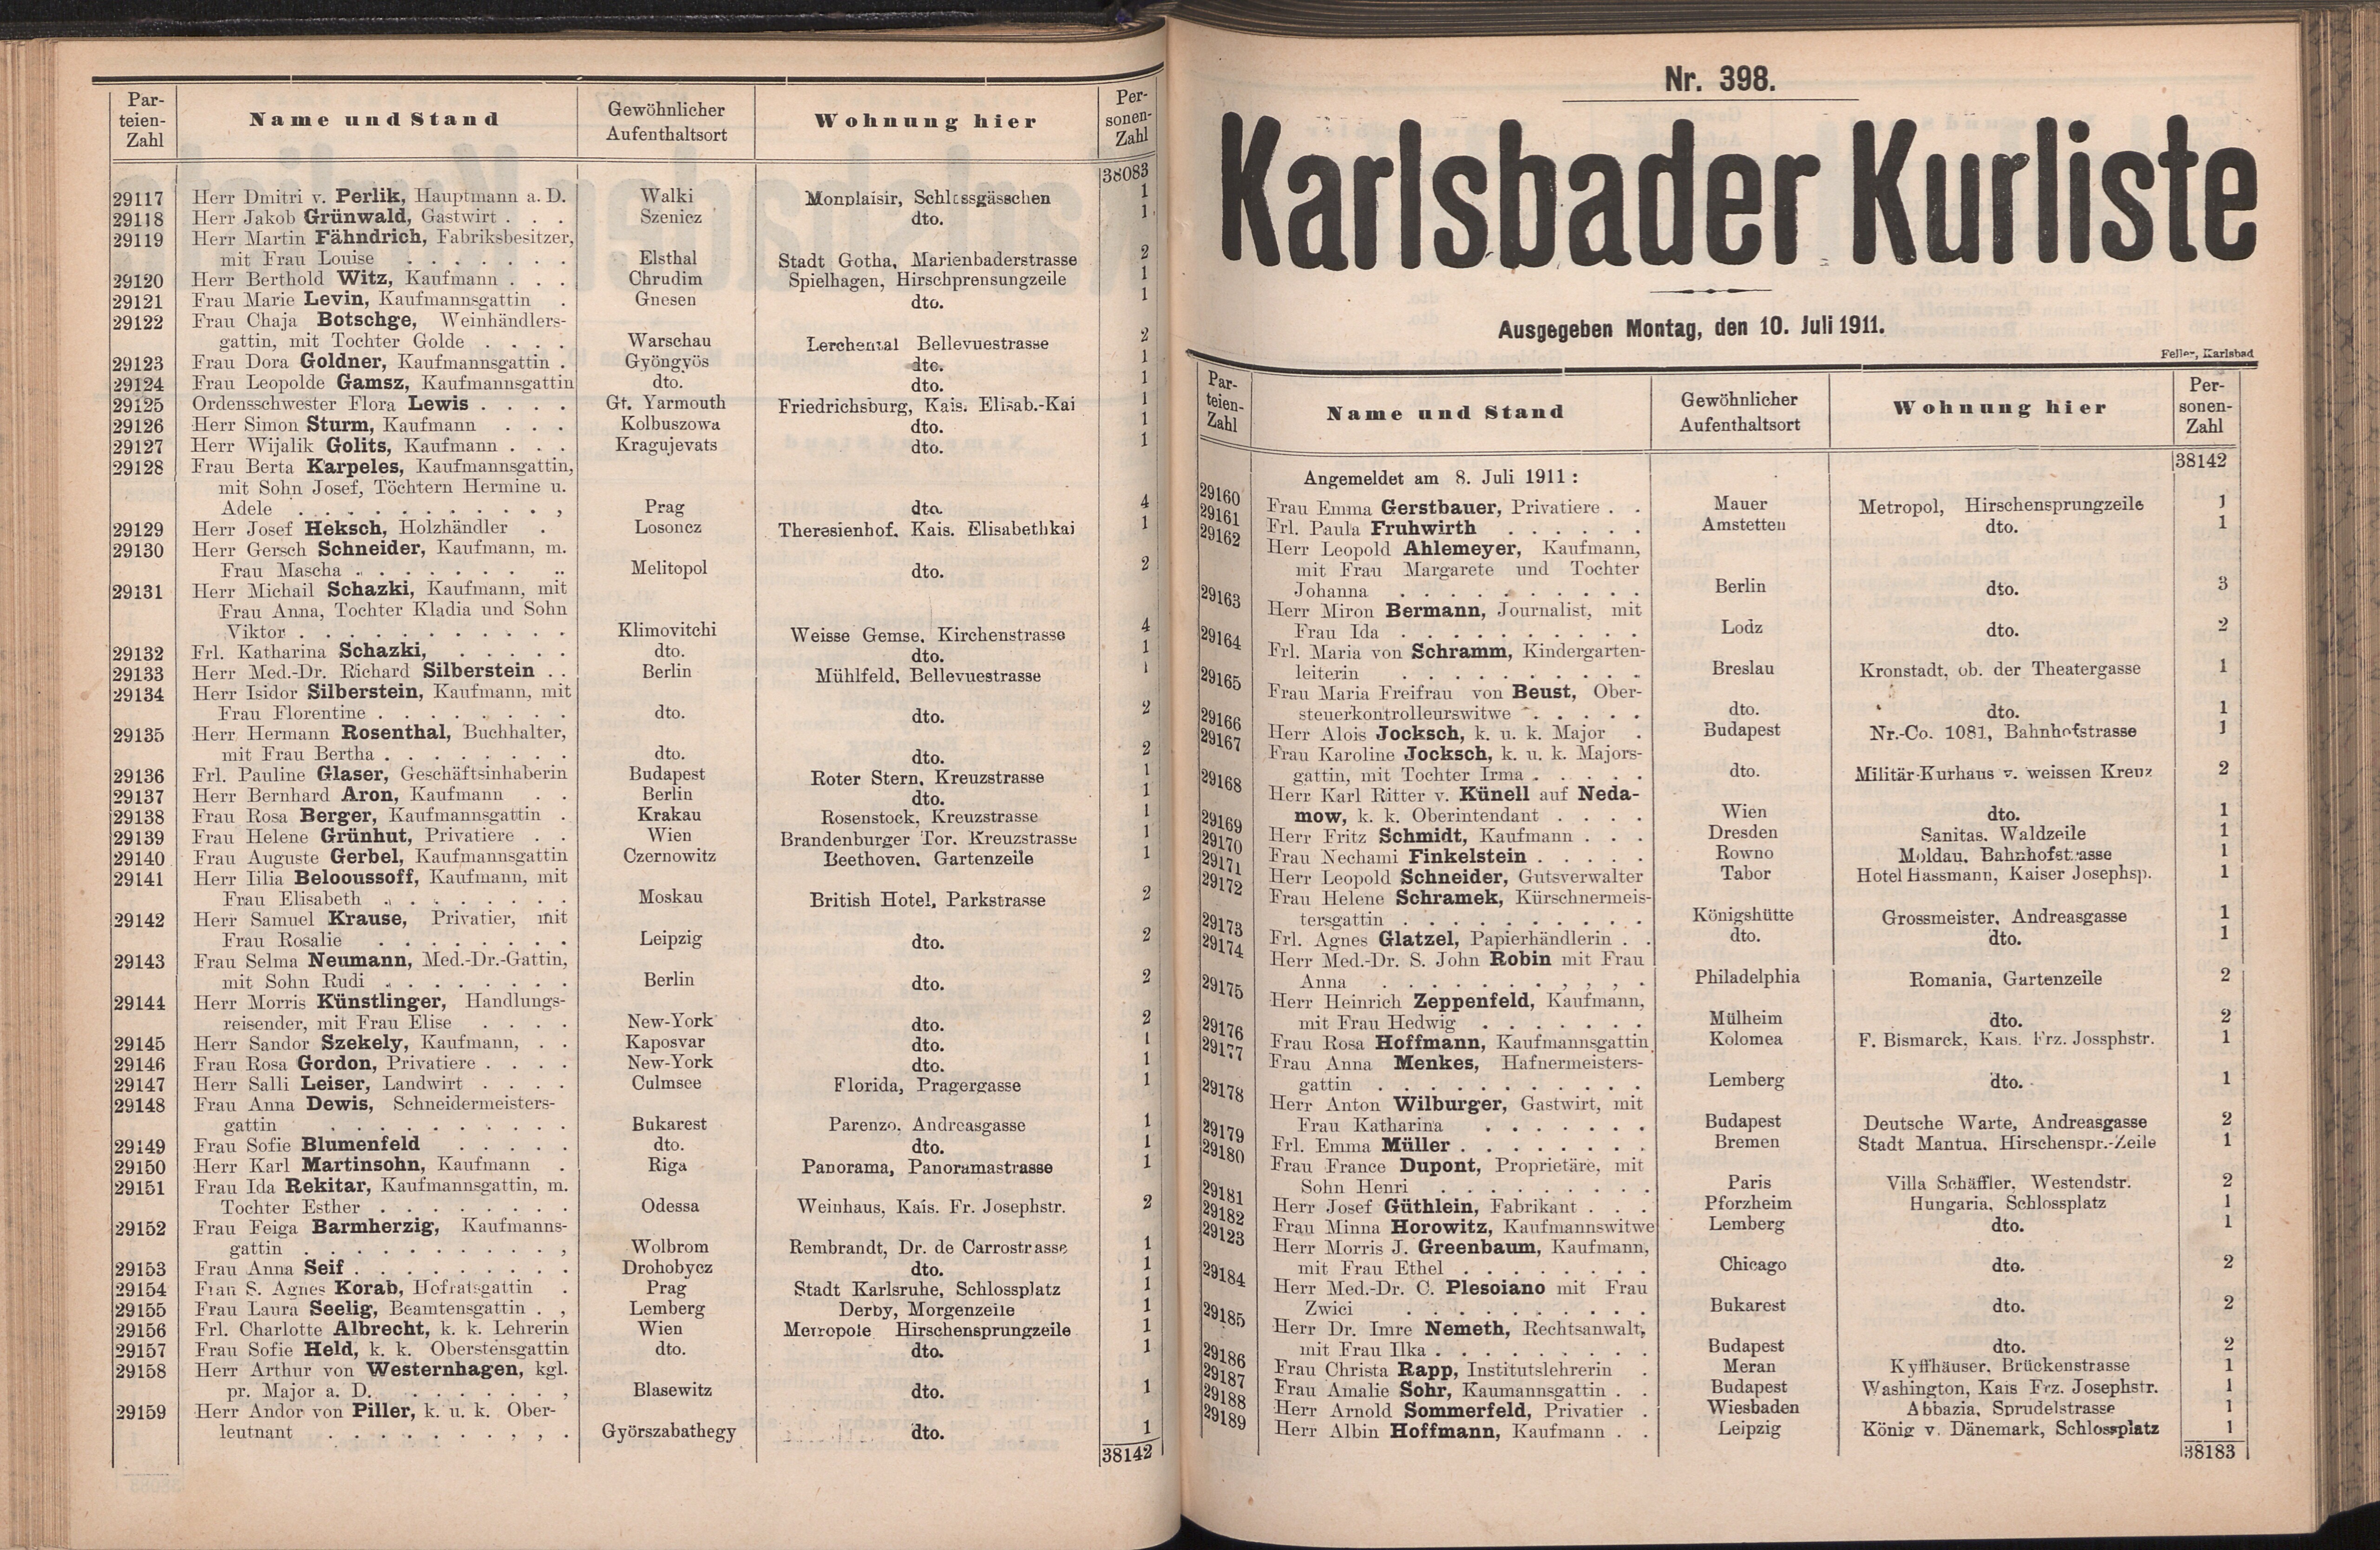 64. soap-kv_knihovna_karlsbader-kurliste-1911-2_0640